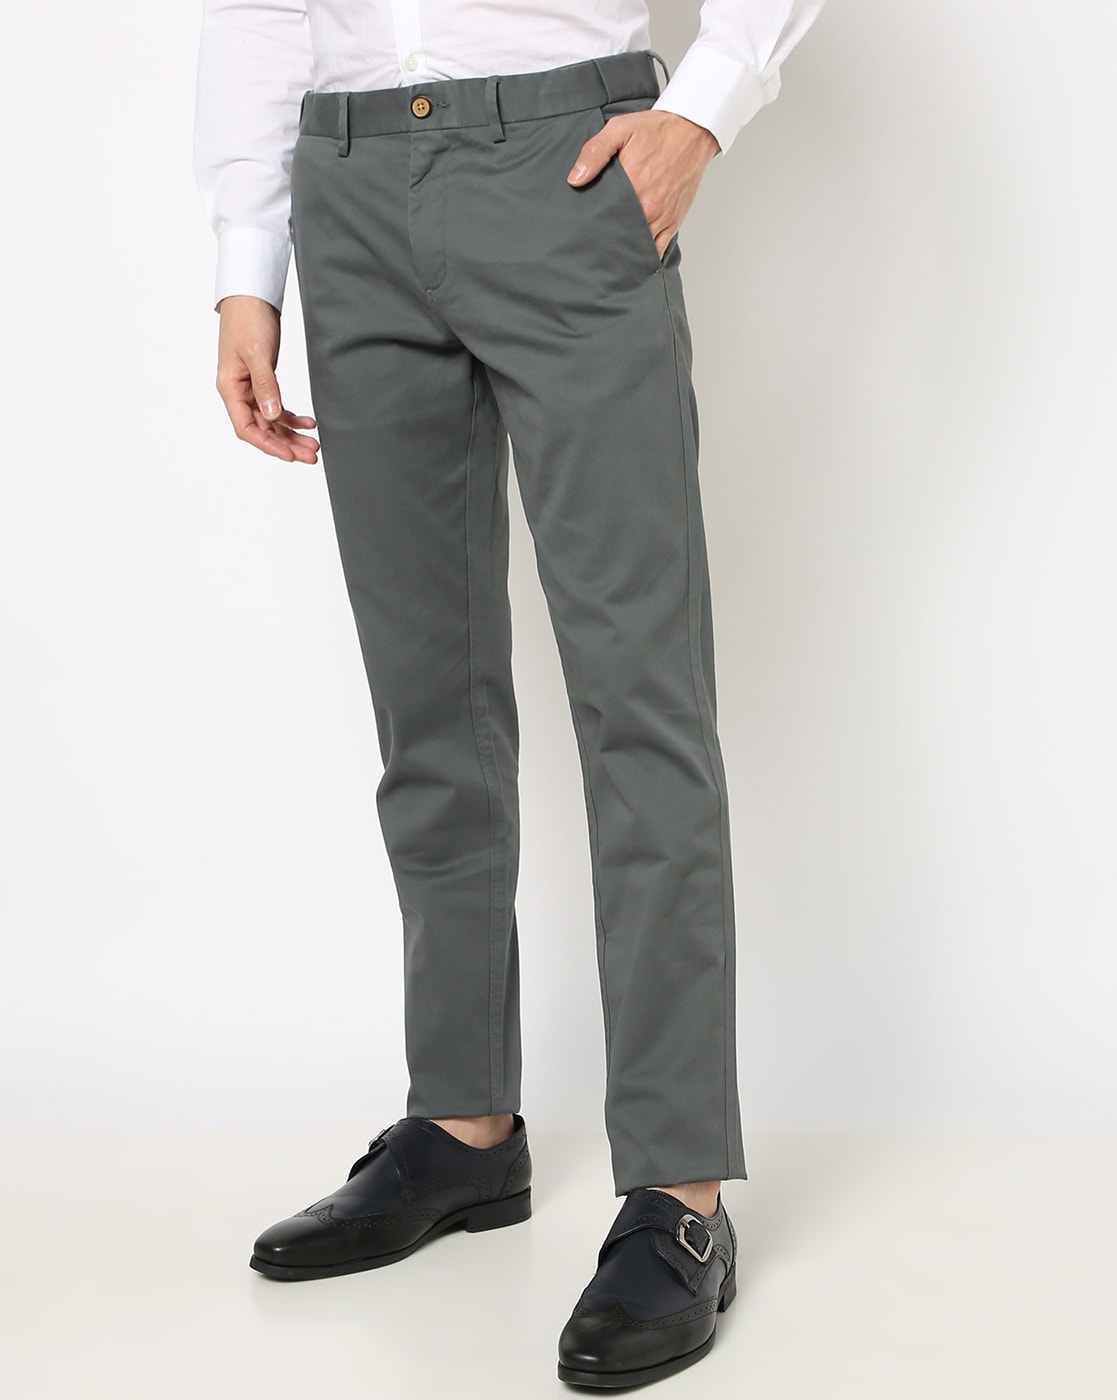 45 Great Shirt Color Ideas For Grey Pants - Hood MWR-mncb.edu.vn